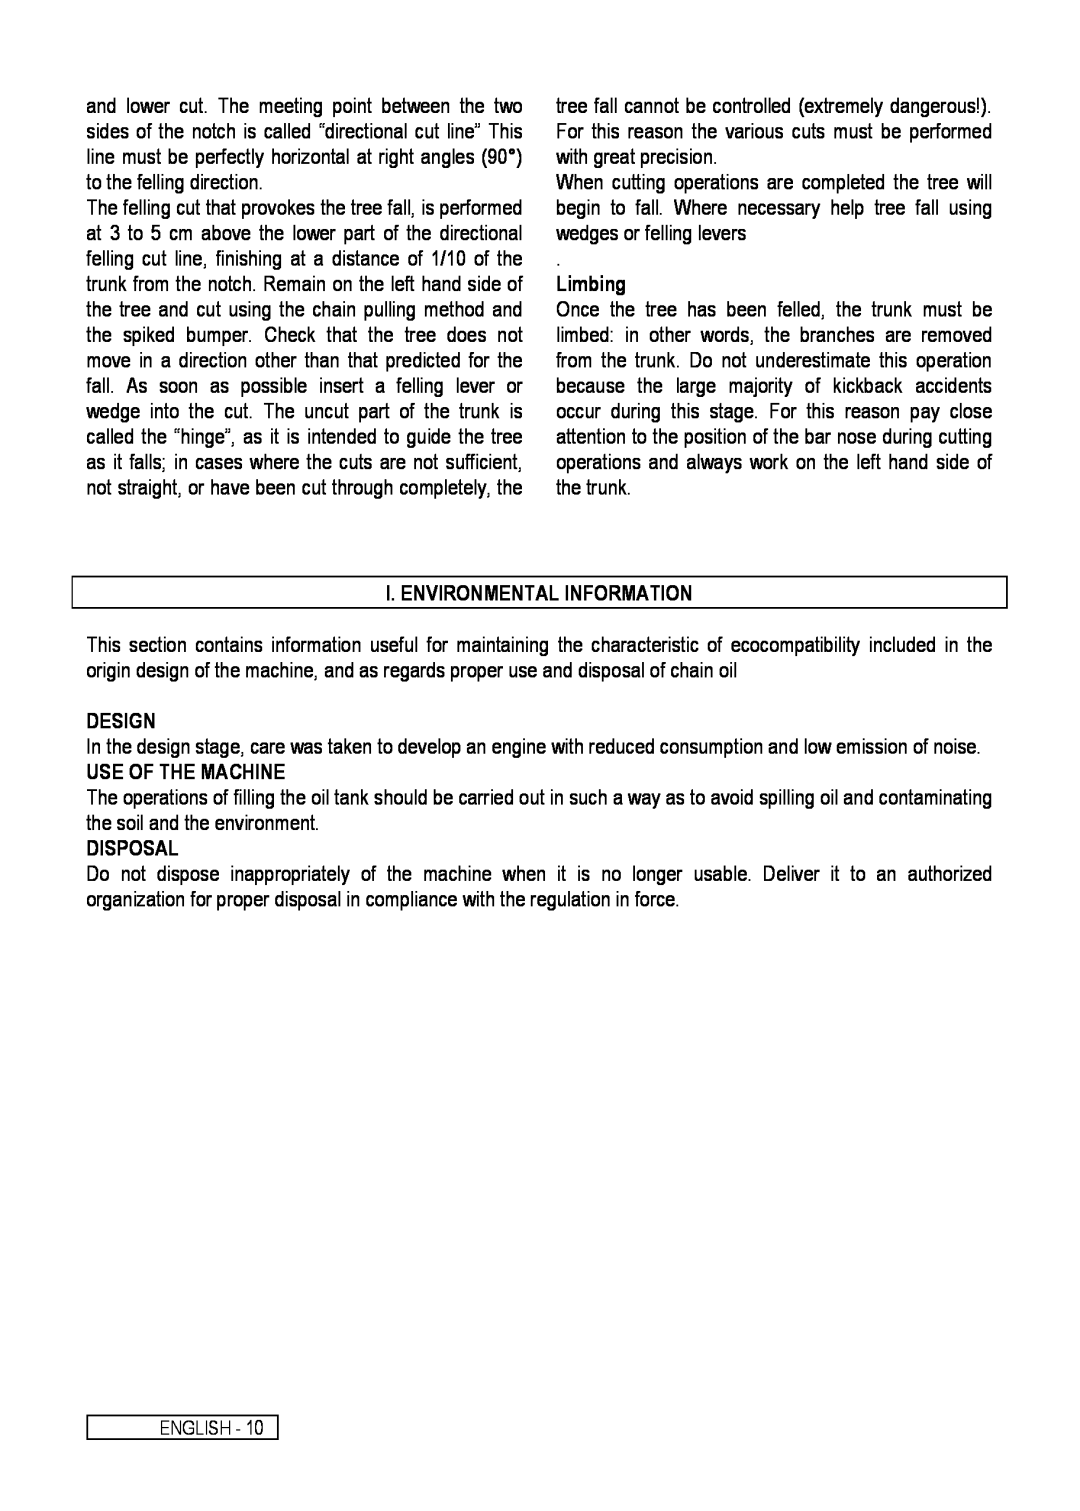 Electrolux Chain Saw manual Limbing, I. Environmental Information, Design, Use Of The Machine, Disposal 